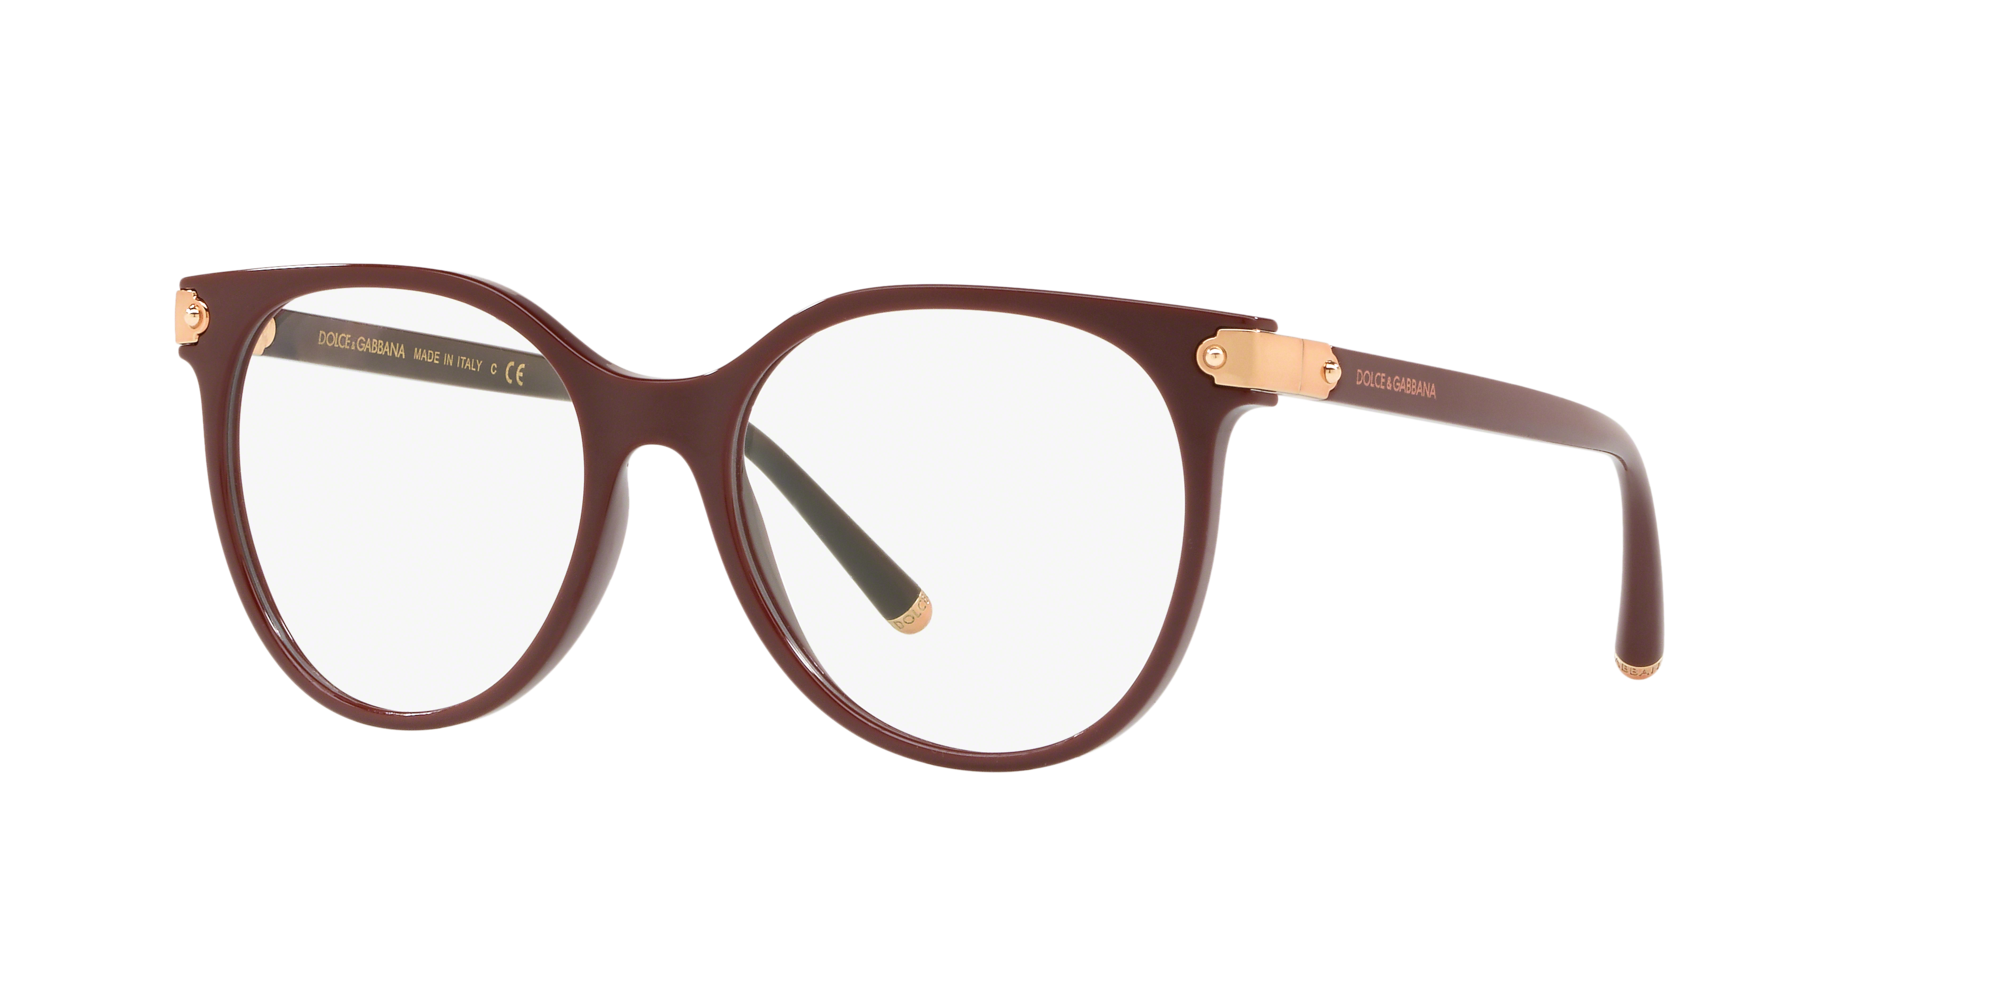 dolce and gabbana eyeglasses target